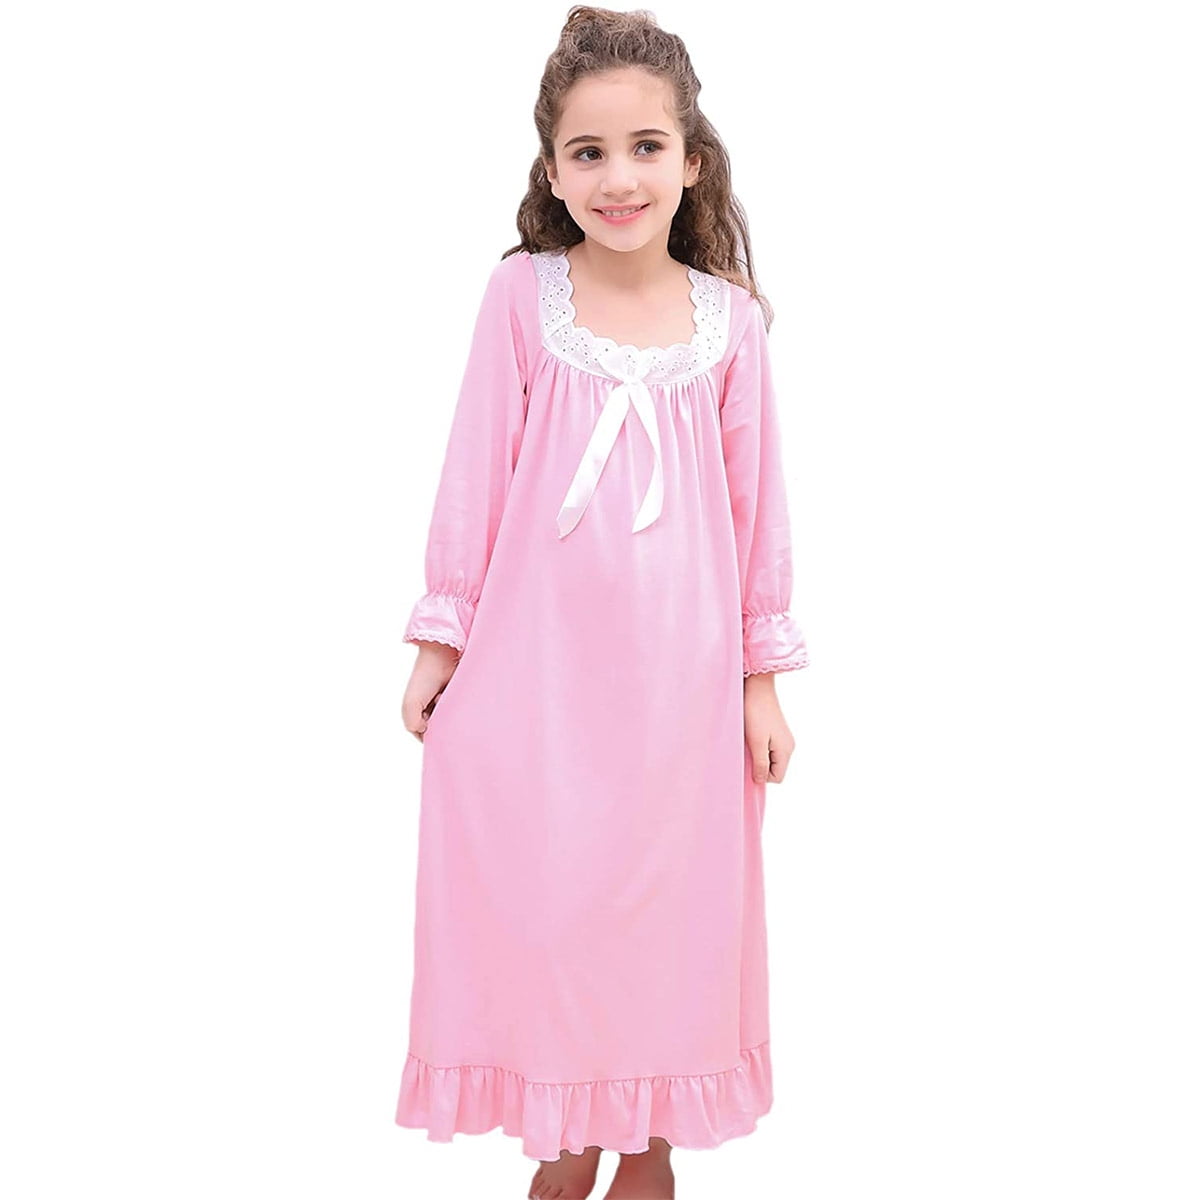 Girls Princess Nightgown Winter Soft Fleece Long Sleeve Sleepwear for Kids 3-12 Years 